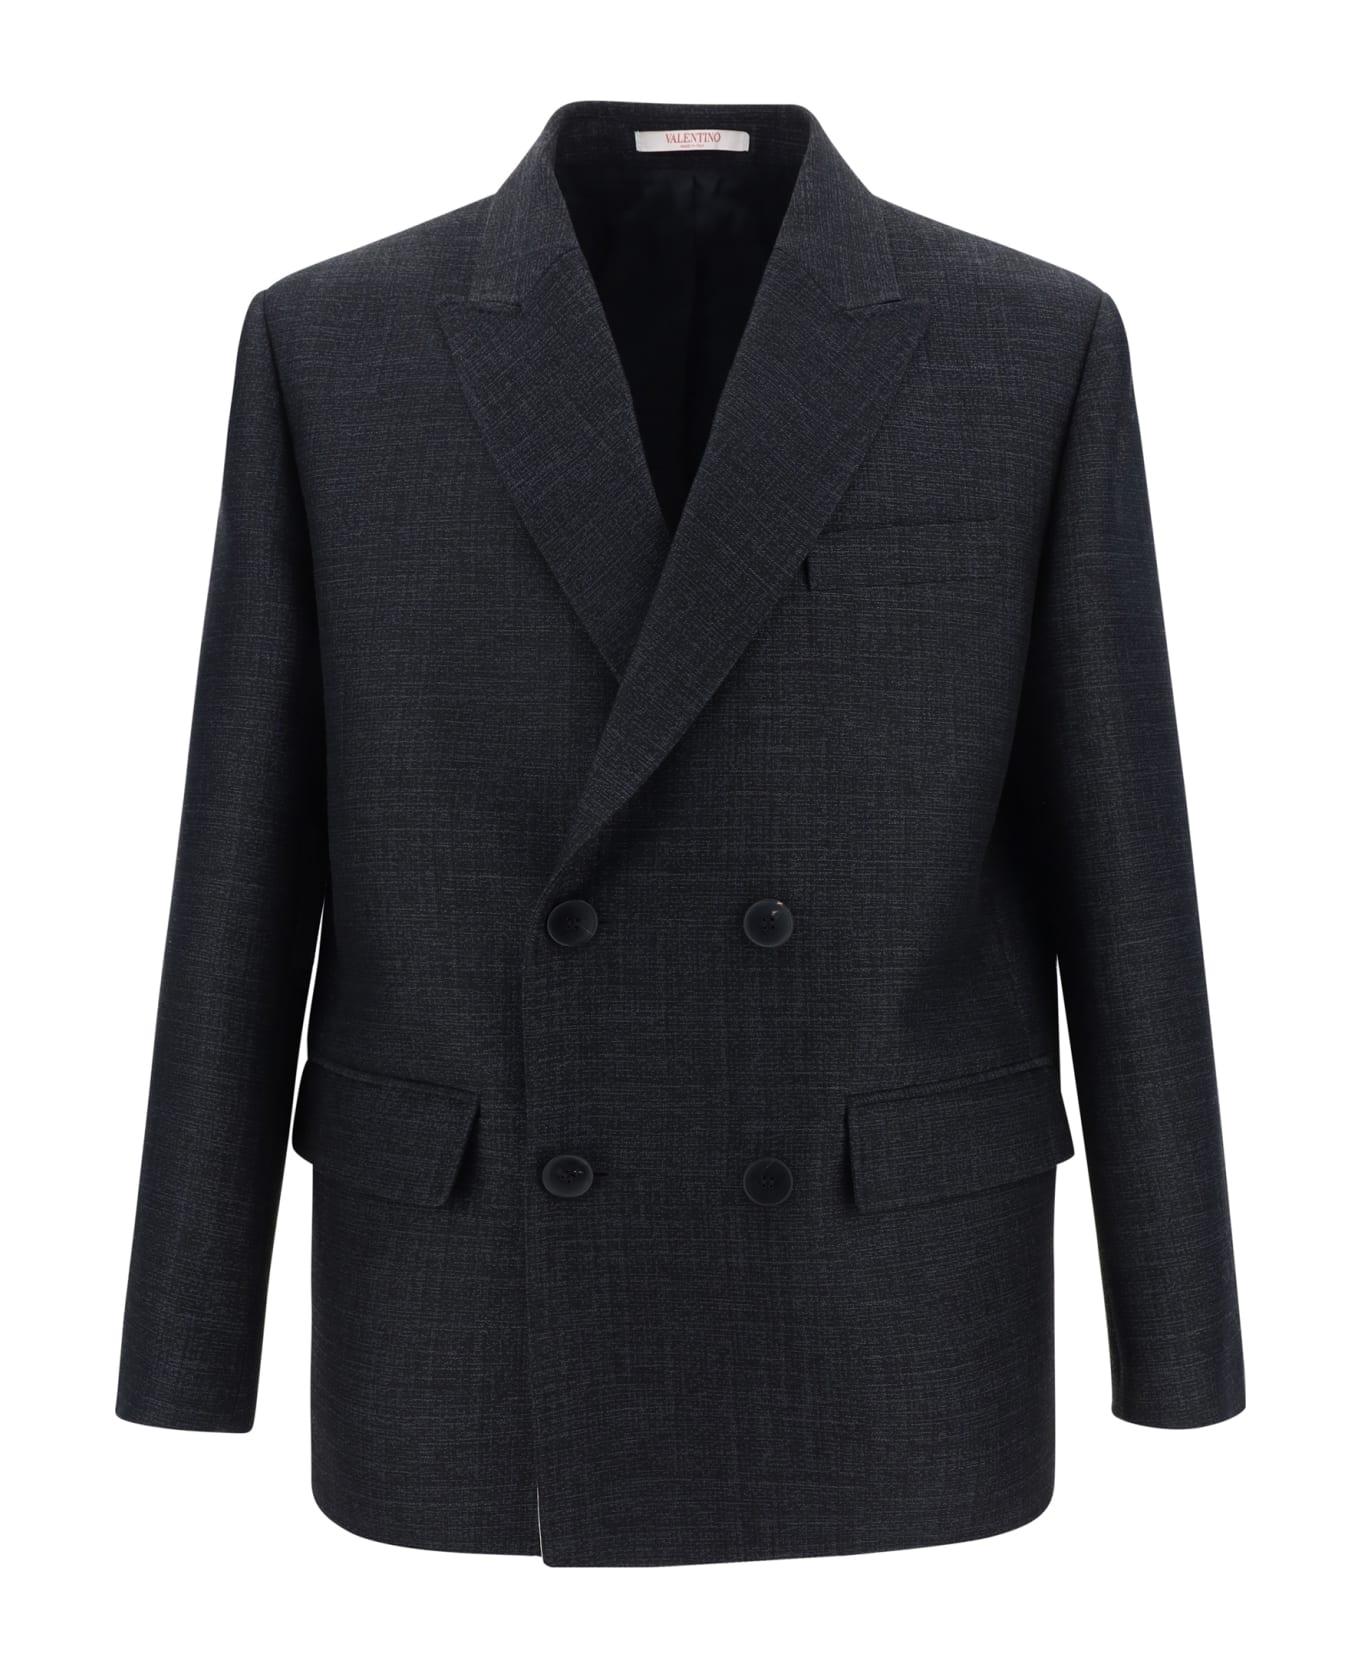 Valentino Formal Blazer Jacket - Grigio Scuro Melange